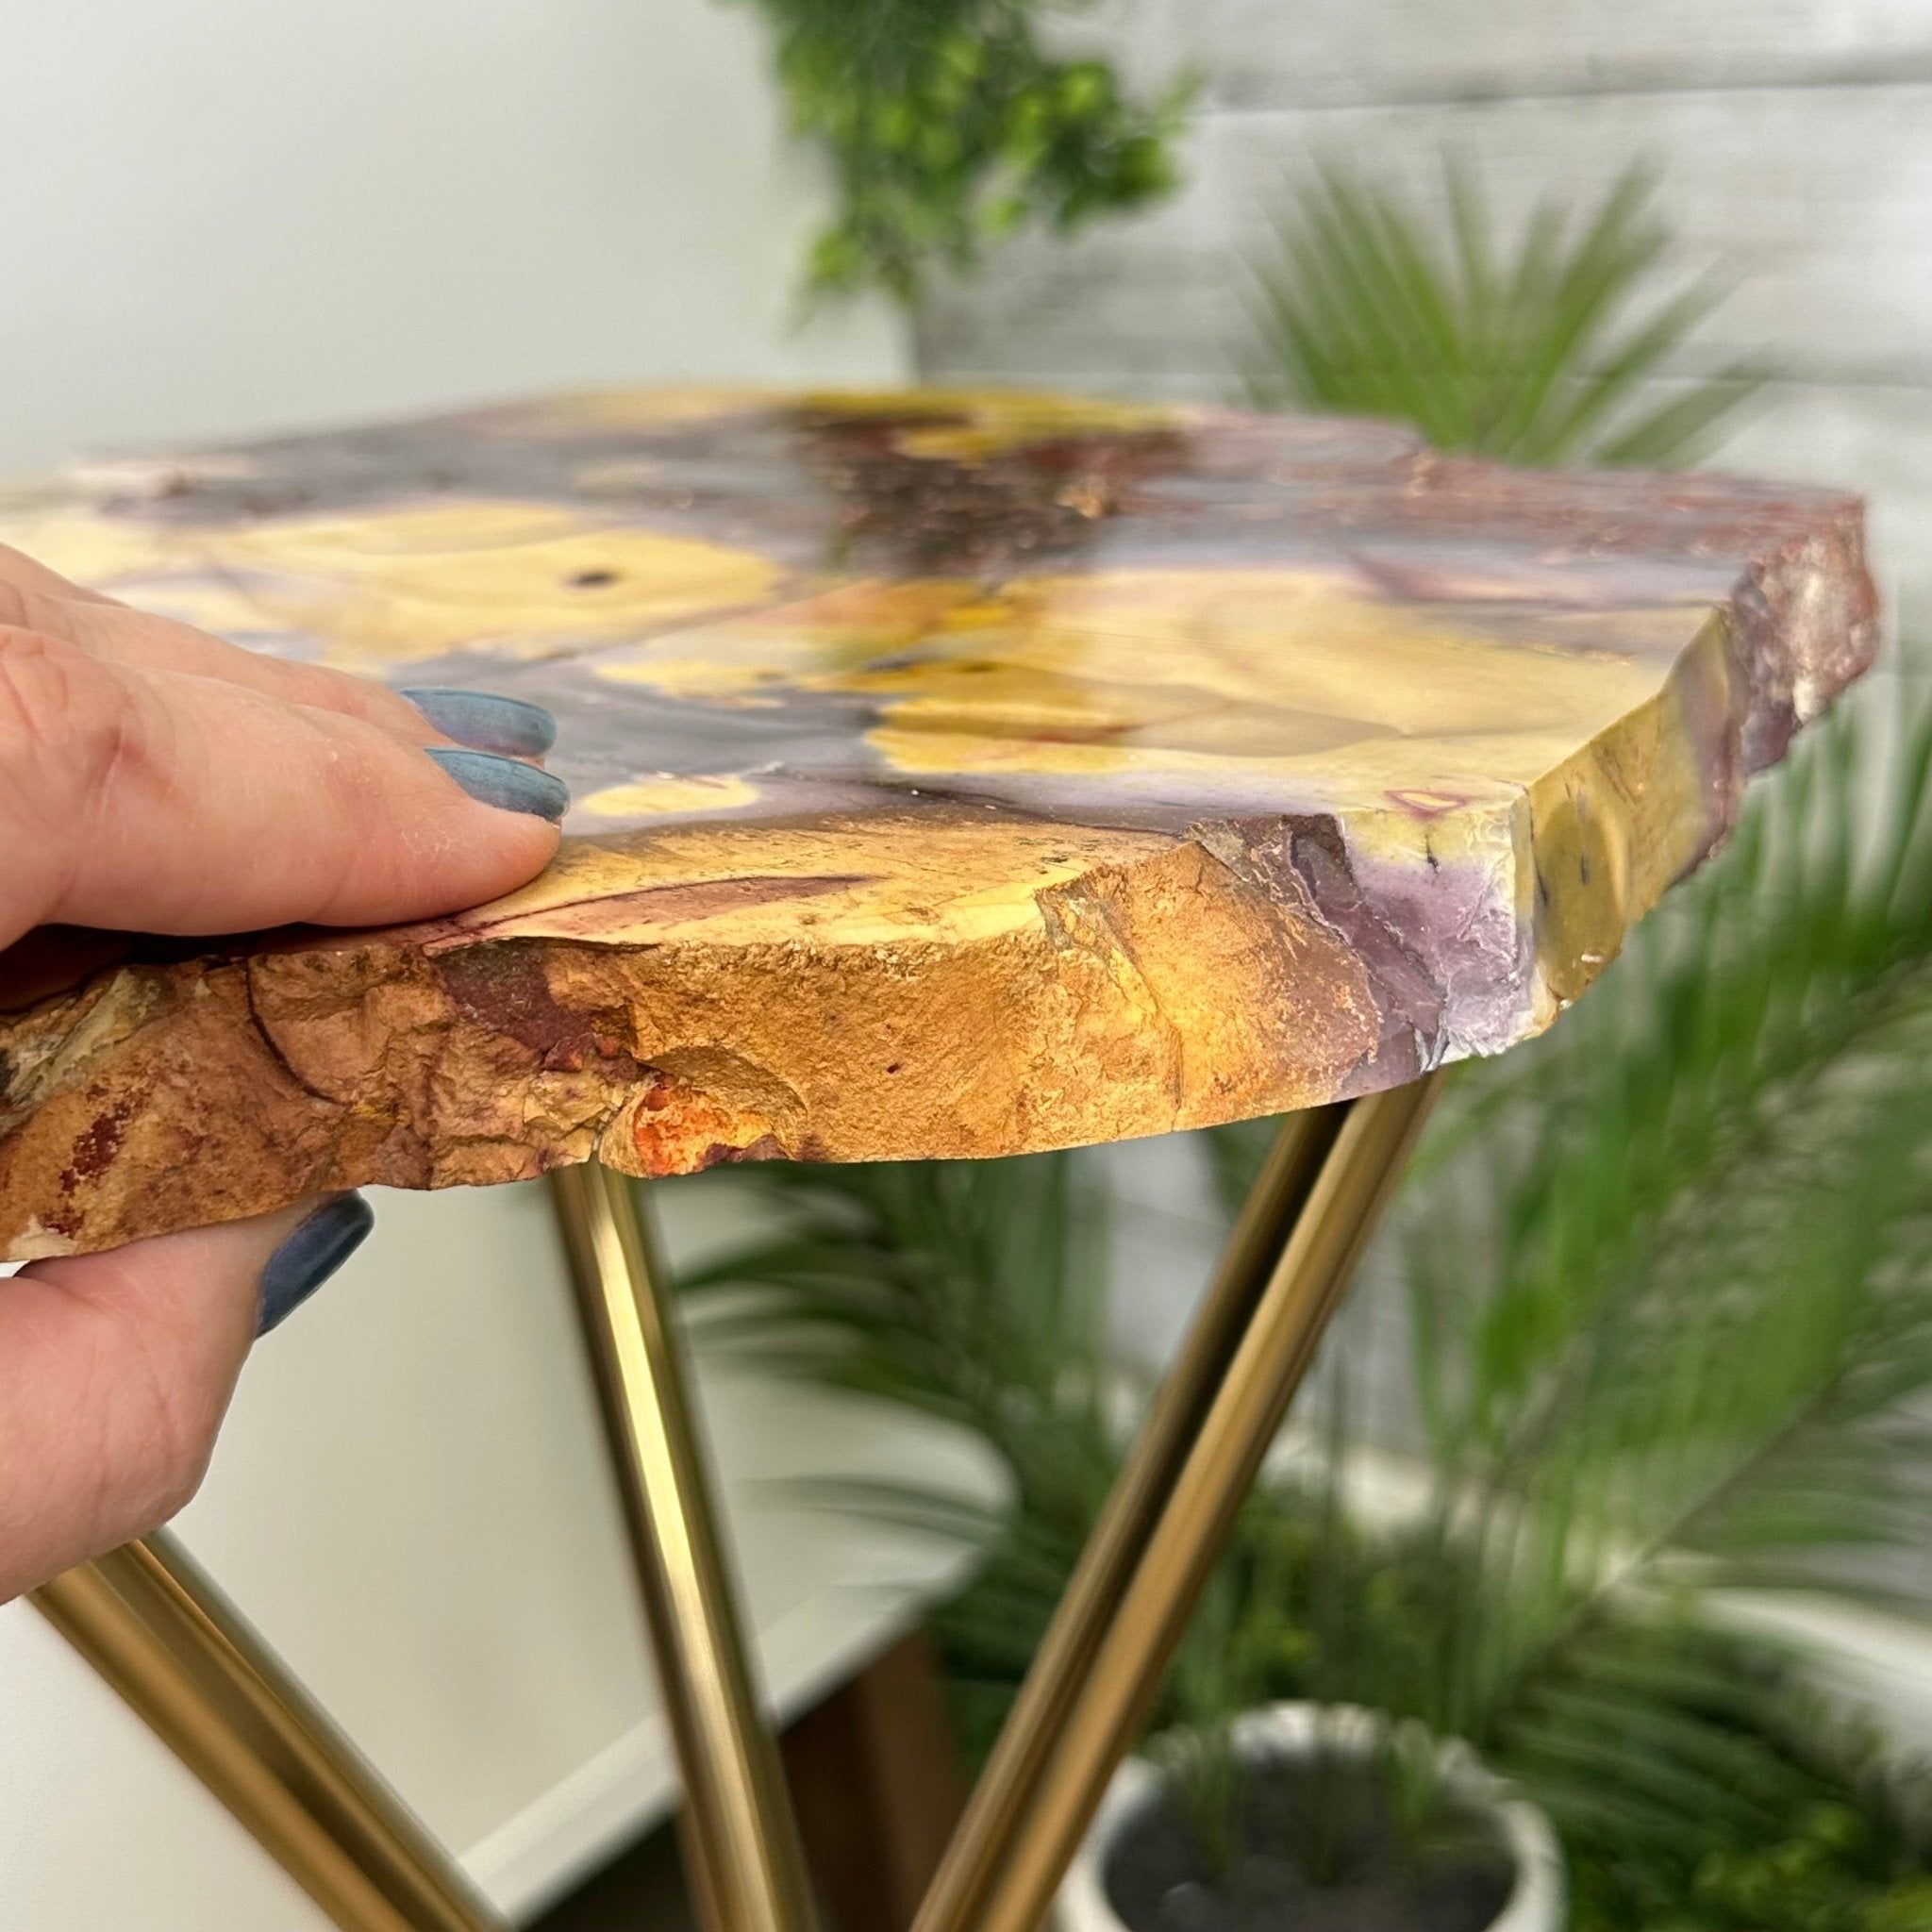 Natural Mookaite Jasper Side Table on Gold Metal Base, 24.8" Tall #1340MJ-002 - Brazil GemsBrazil GemsNatural Mookaite Jasper Side Table on Gold Metal Base, 24.8" Tall #1340MJ-002Tables: Side1340MJ-002